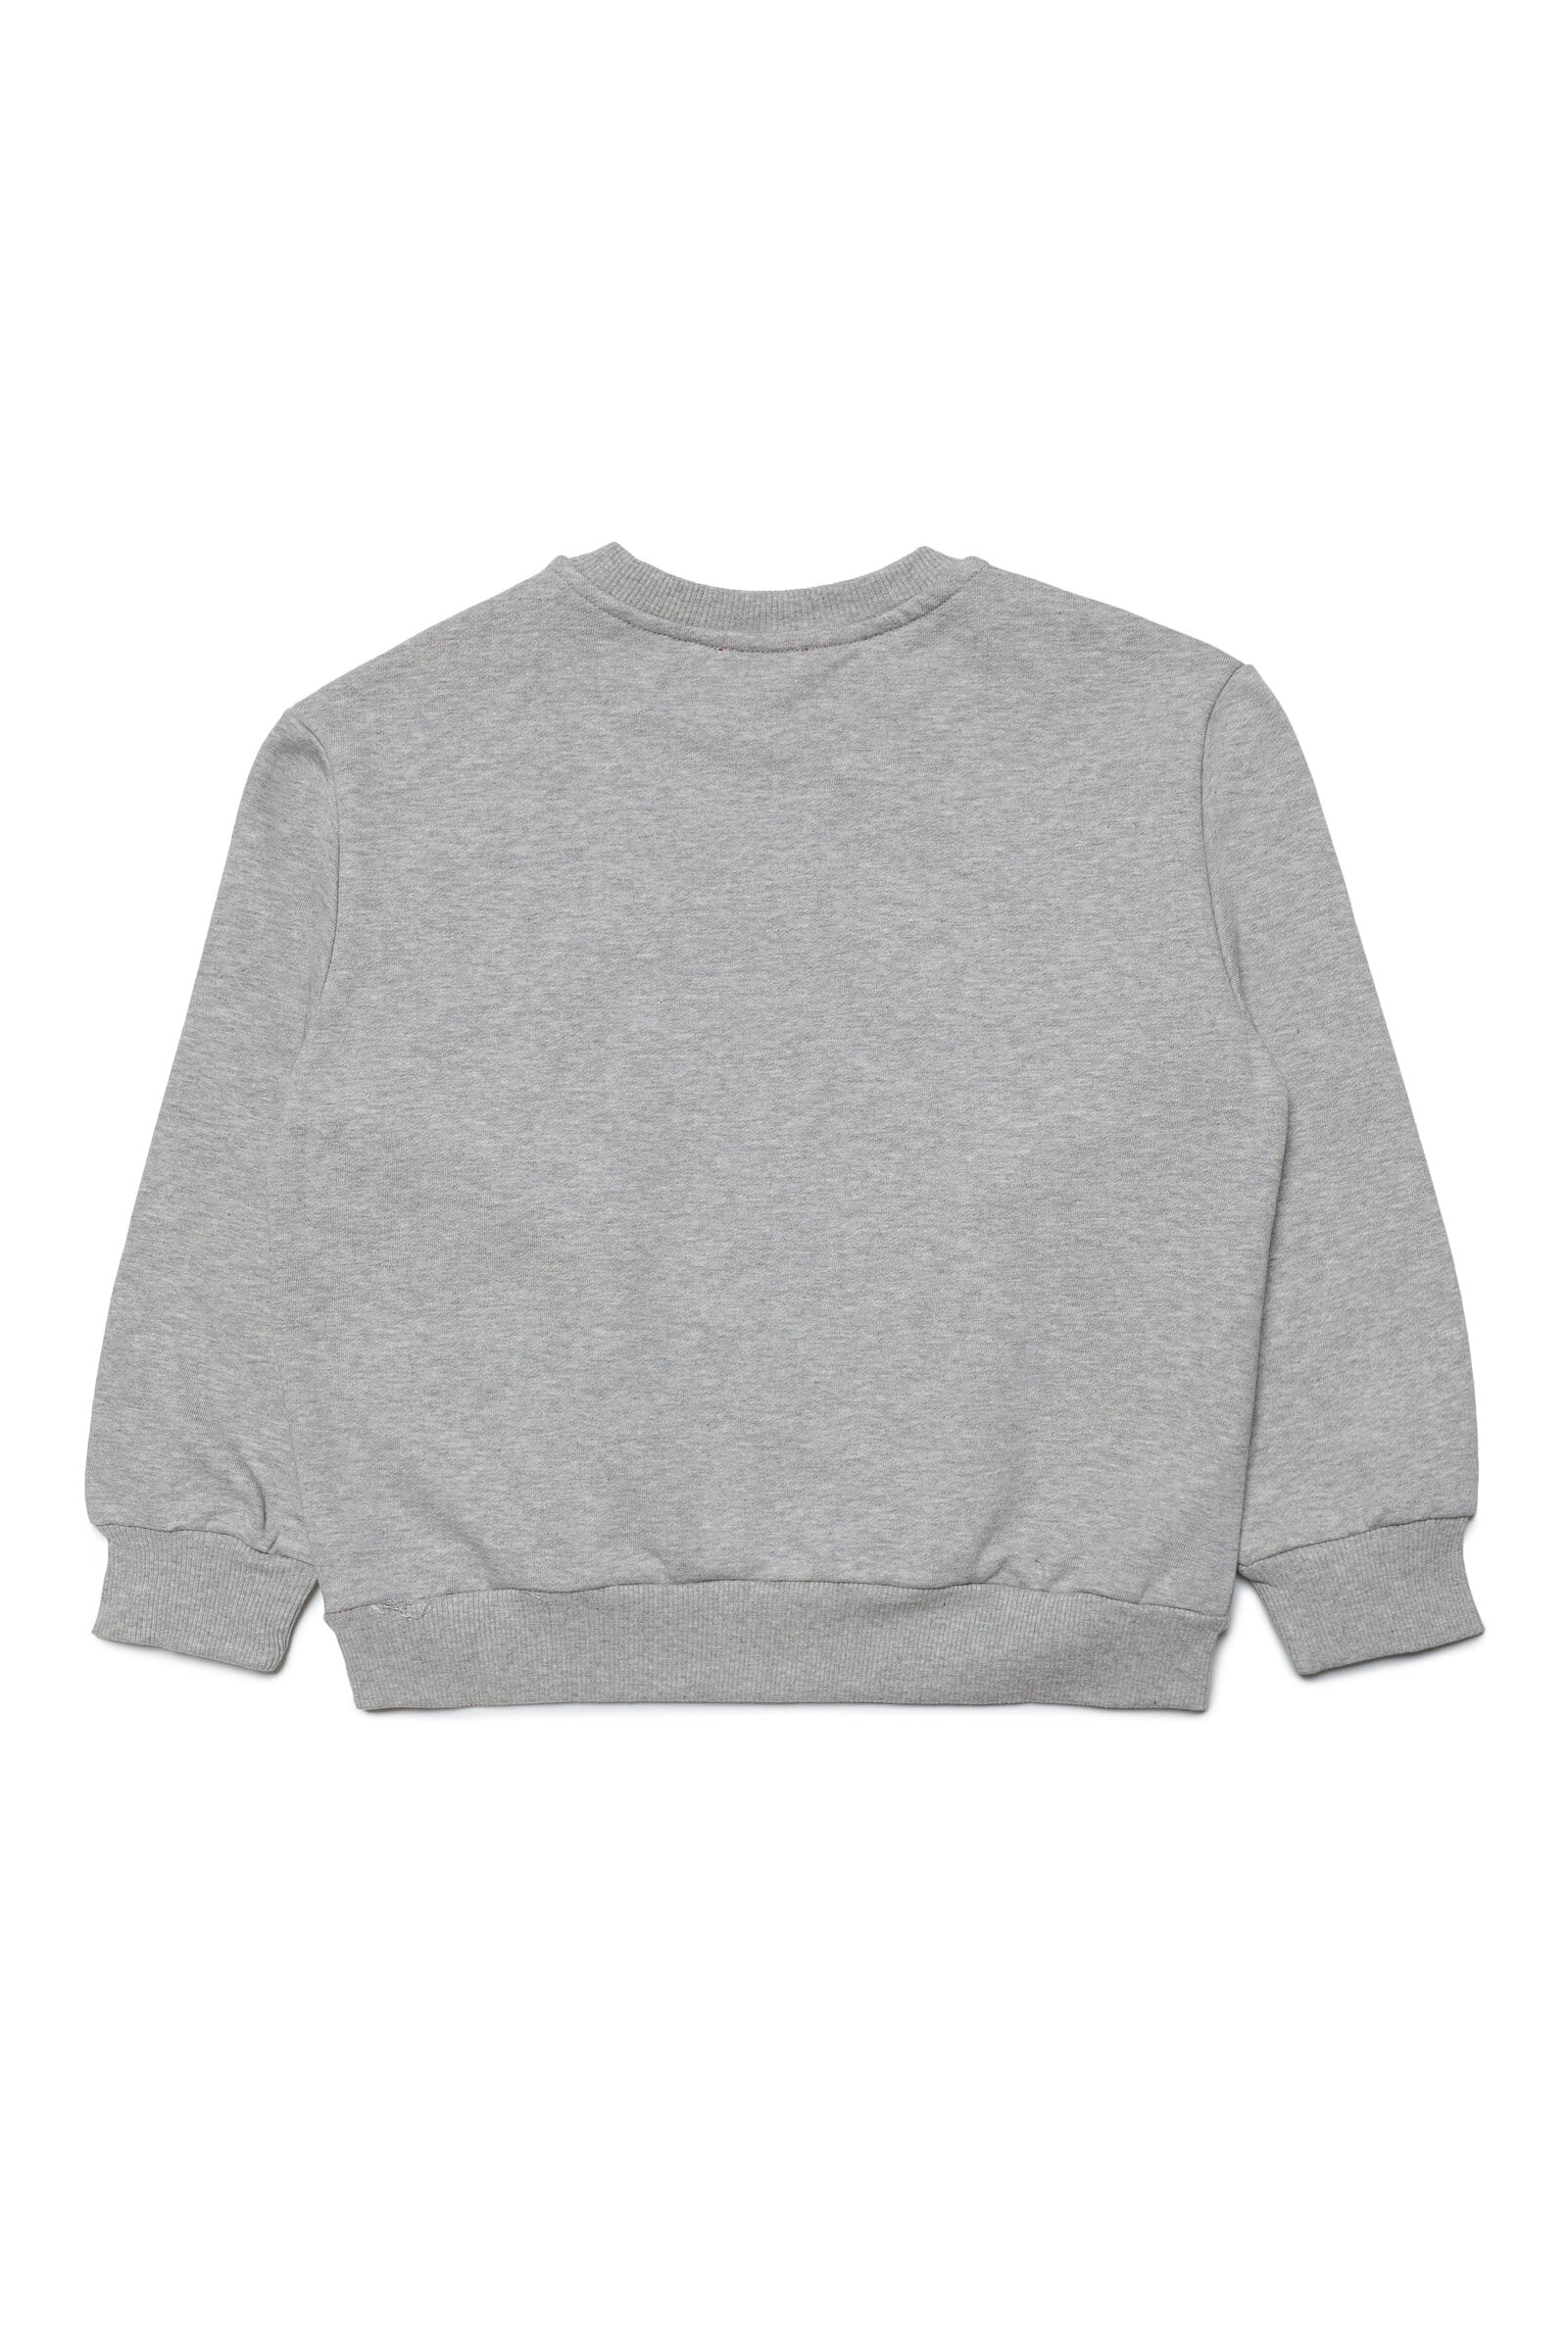 Gray cotton crewneck sweatshirt with embroidered D logo